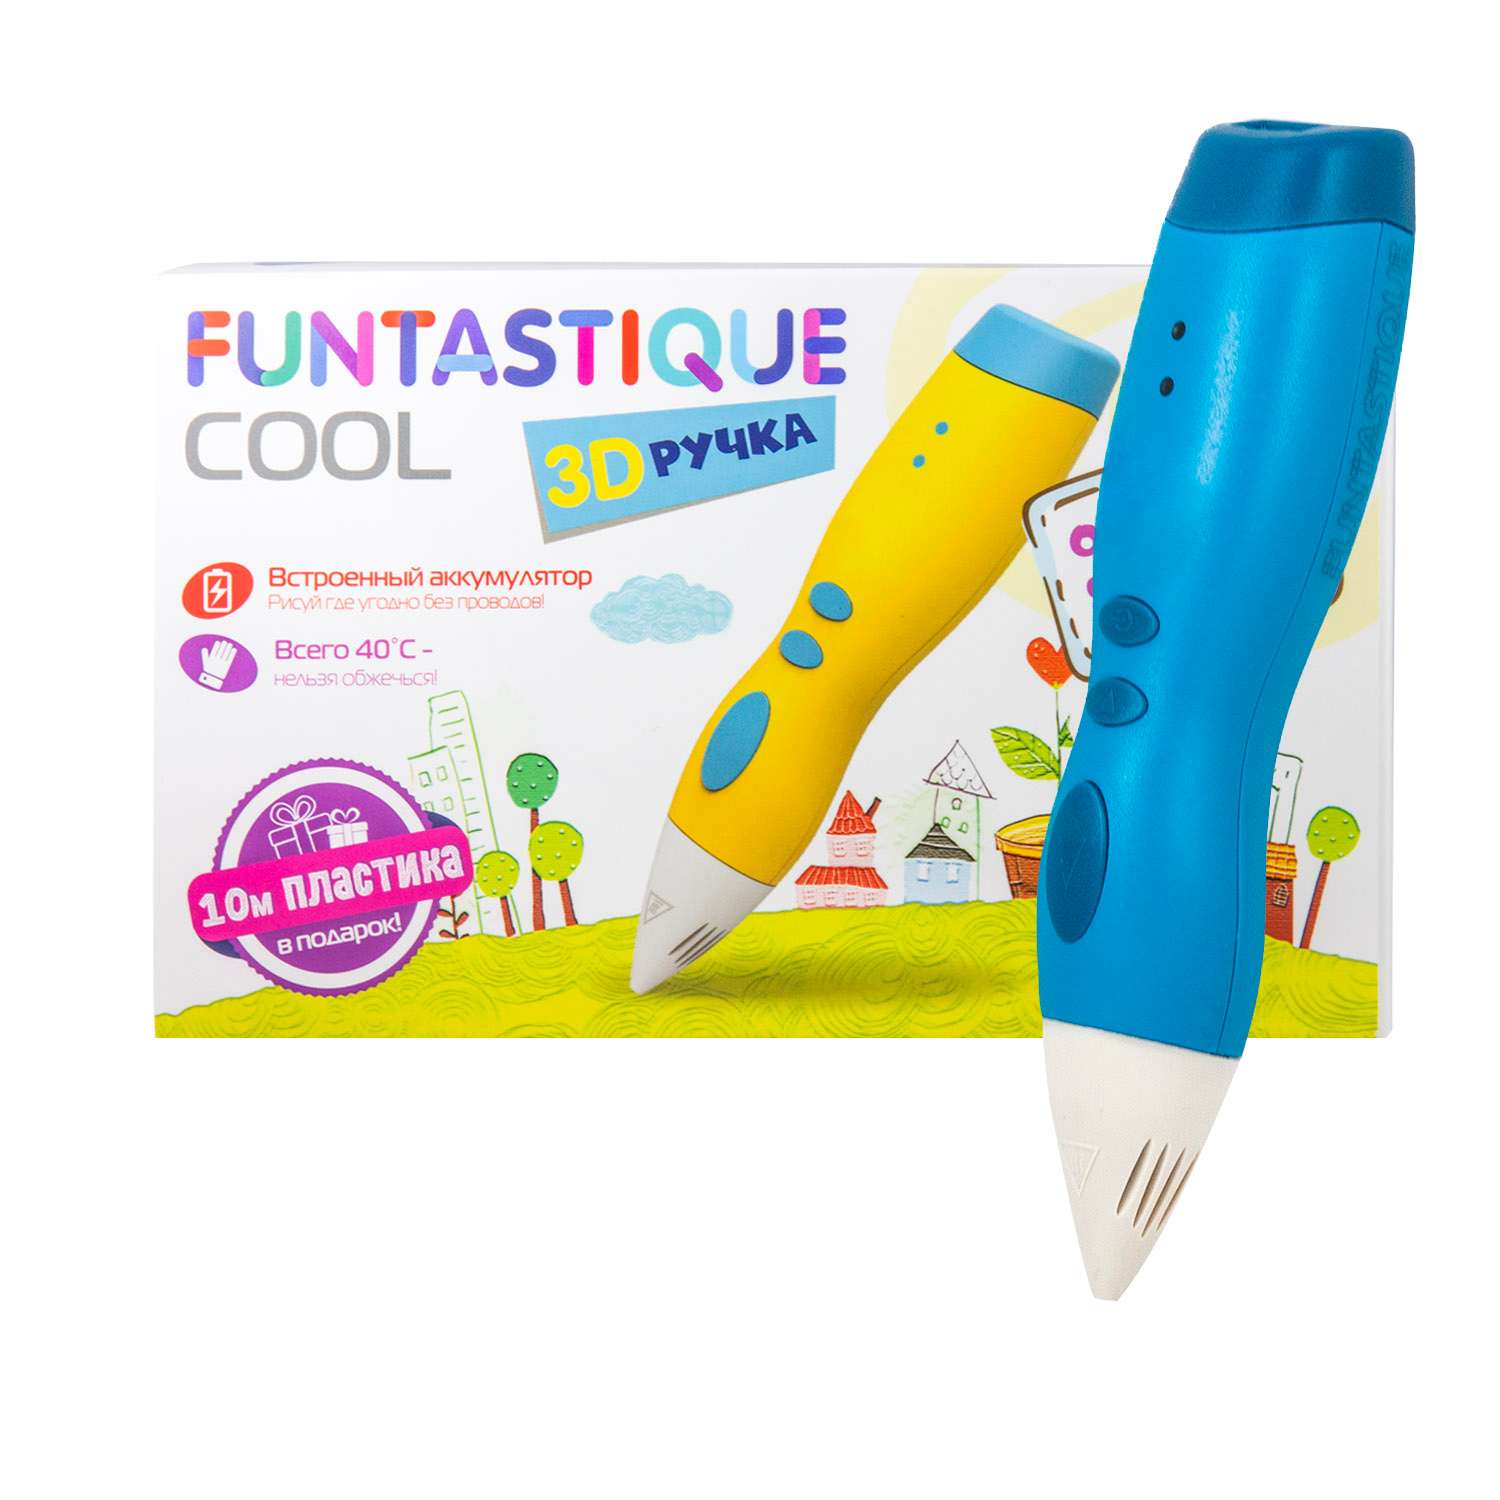 3D ручка FUNTASTIQUE cool голубой - фото 1